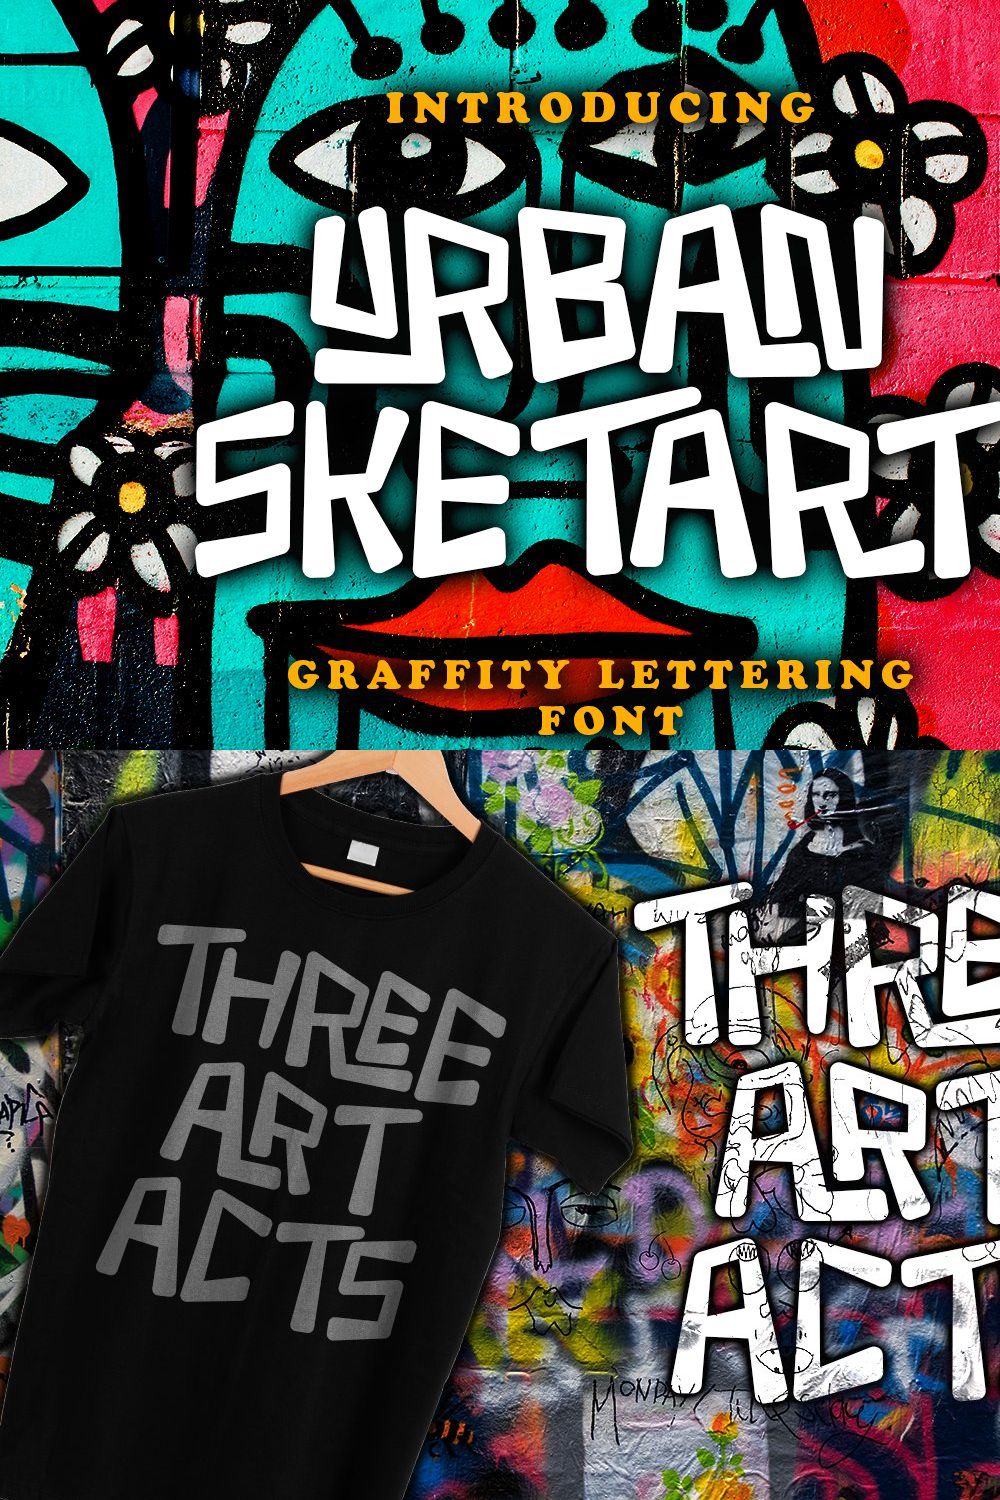 Urban Sketart - Graffiti Font pinterest preview image.